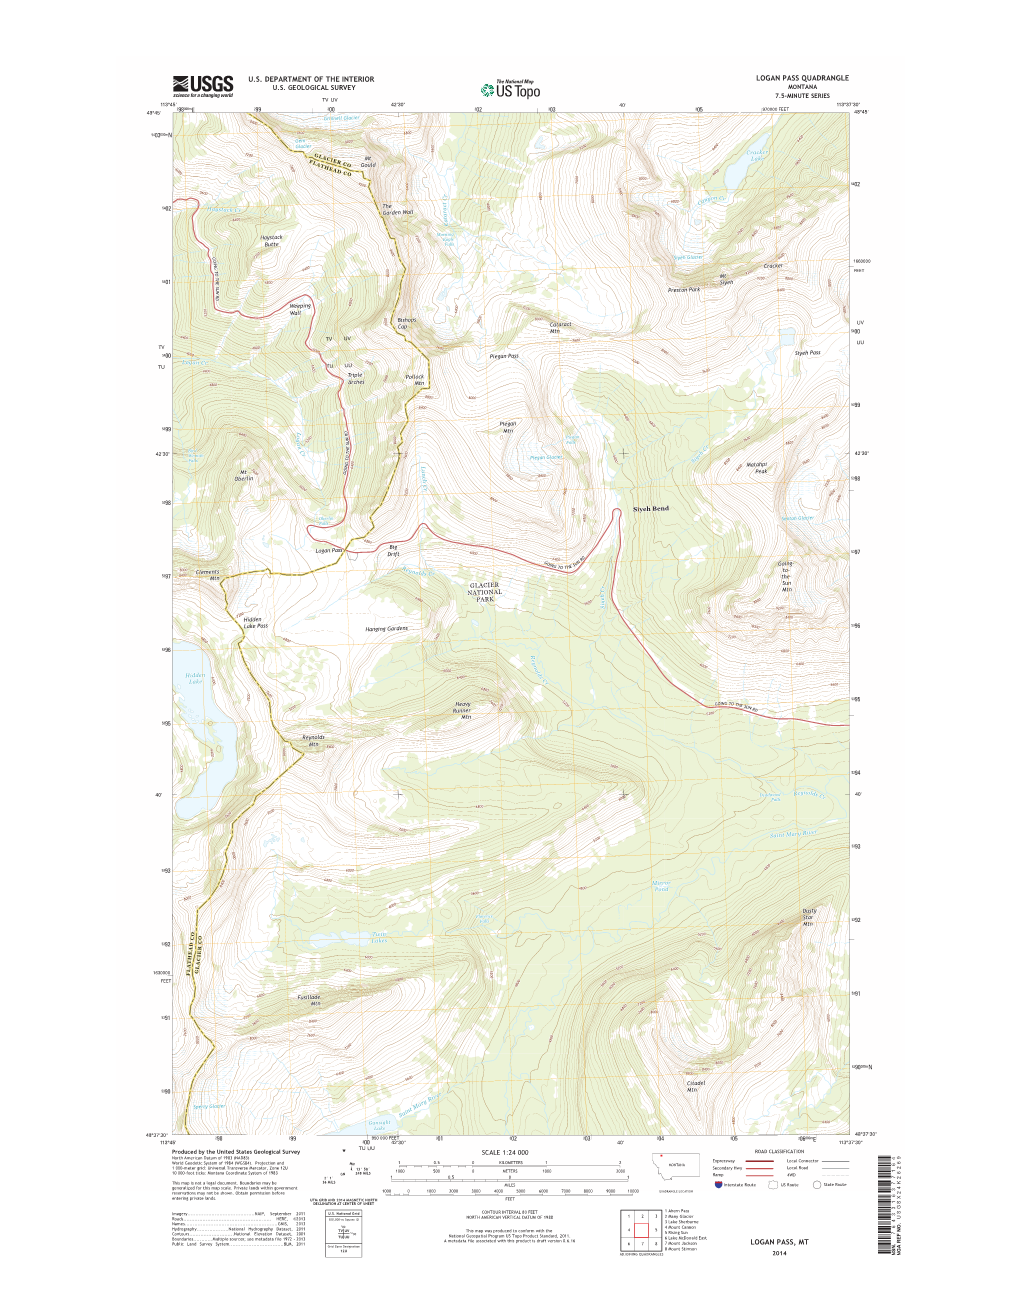 LOGAN PASS, MT Grid Zone Designation 12U 8 Mount Stimson